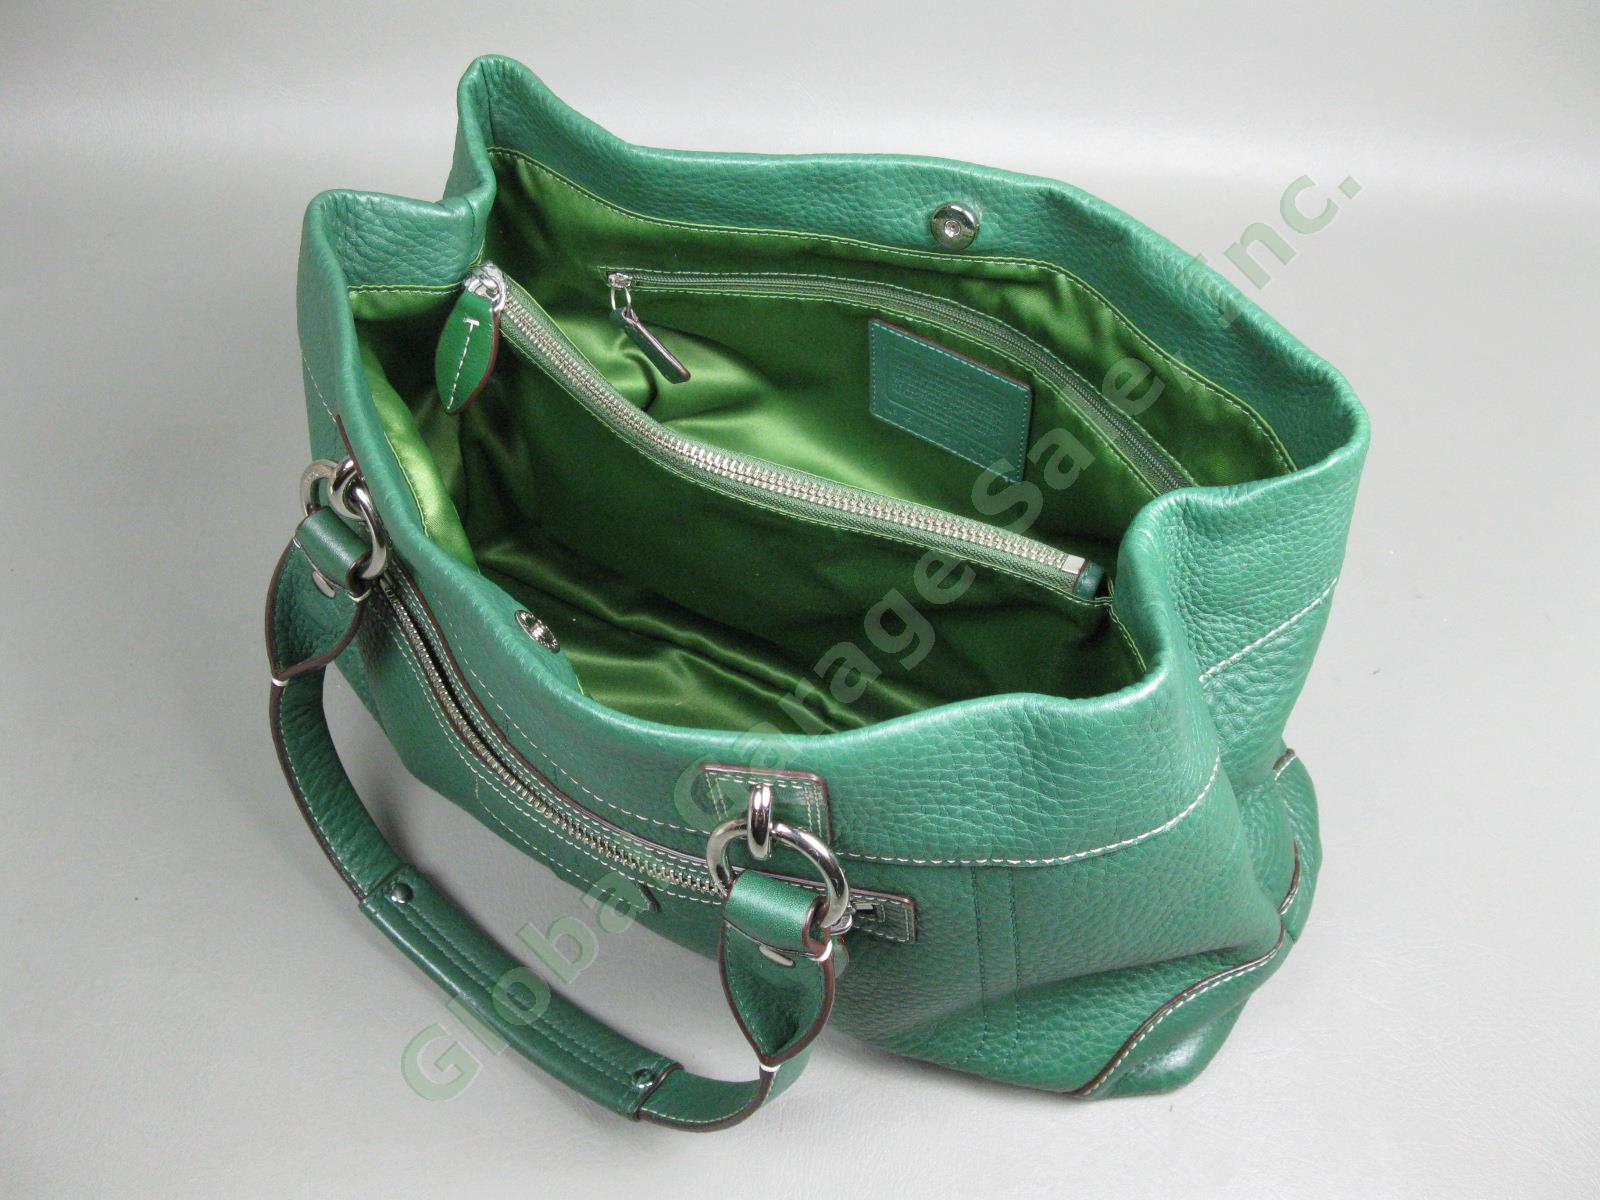 BRAND NEW Coach Designer Dark Green Pebble Leather Handbag Satchel Tote Bag NR 6